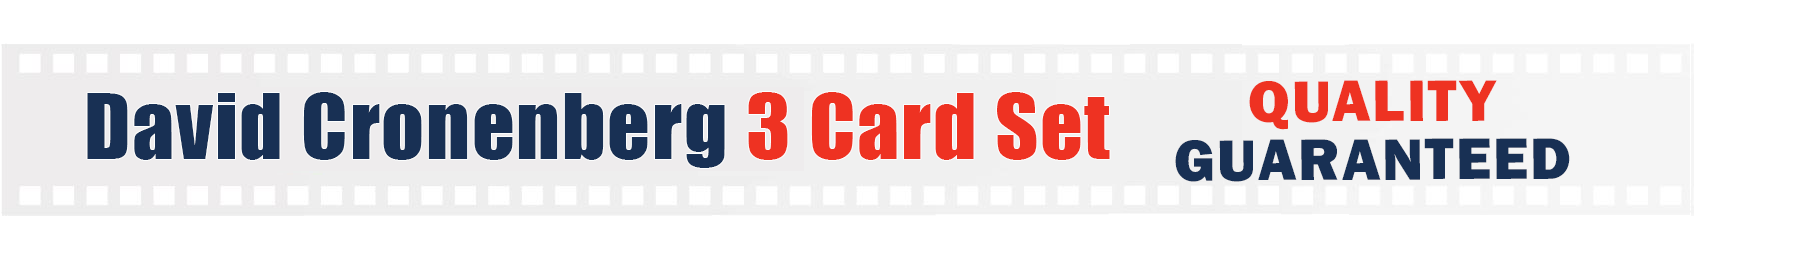 David Cronenberg 3 Card Set